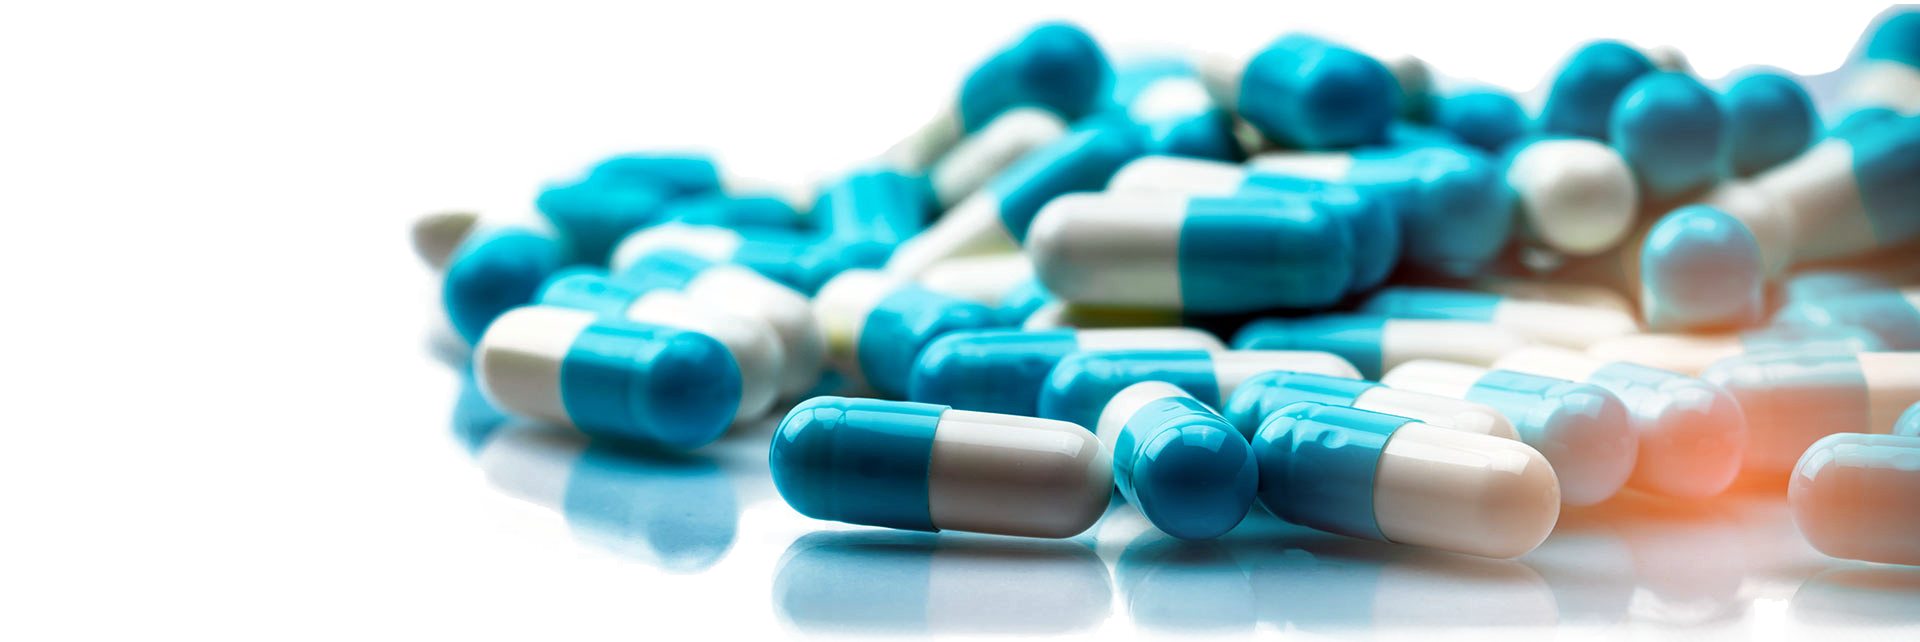 http://nucarepharmaceuticals.com/wp-content/uploads/2020/06/Pharma_Trans.png